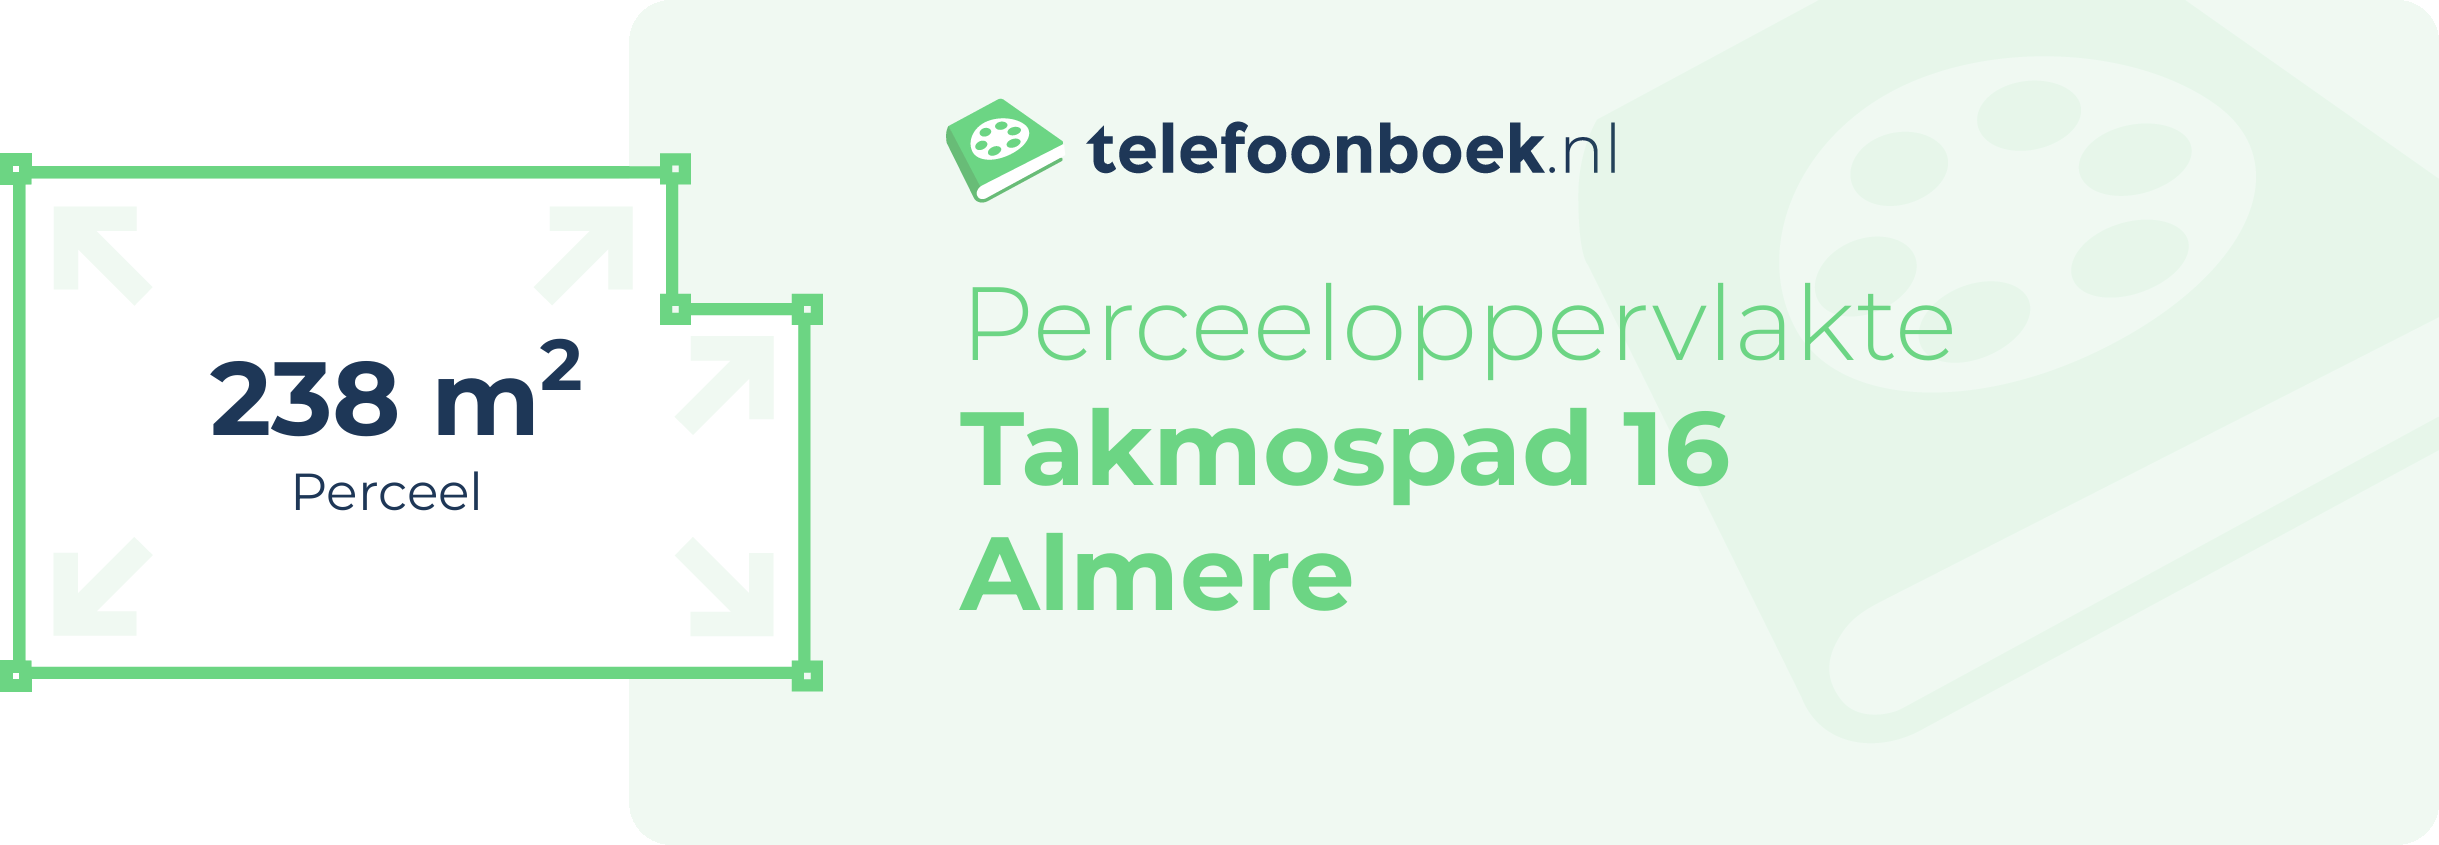 Perceeloppervlakte Takmospad 16 Almere